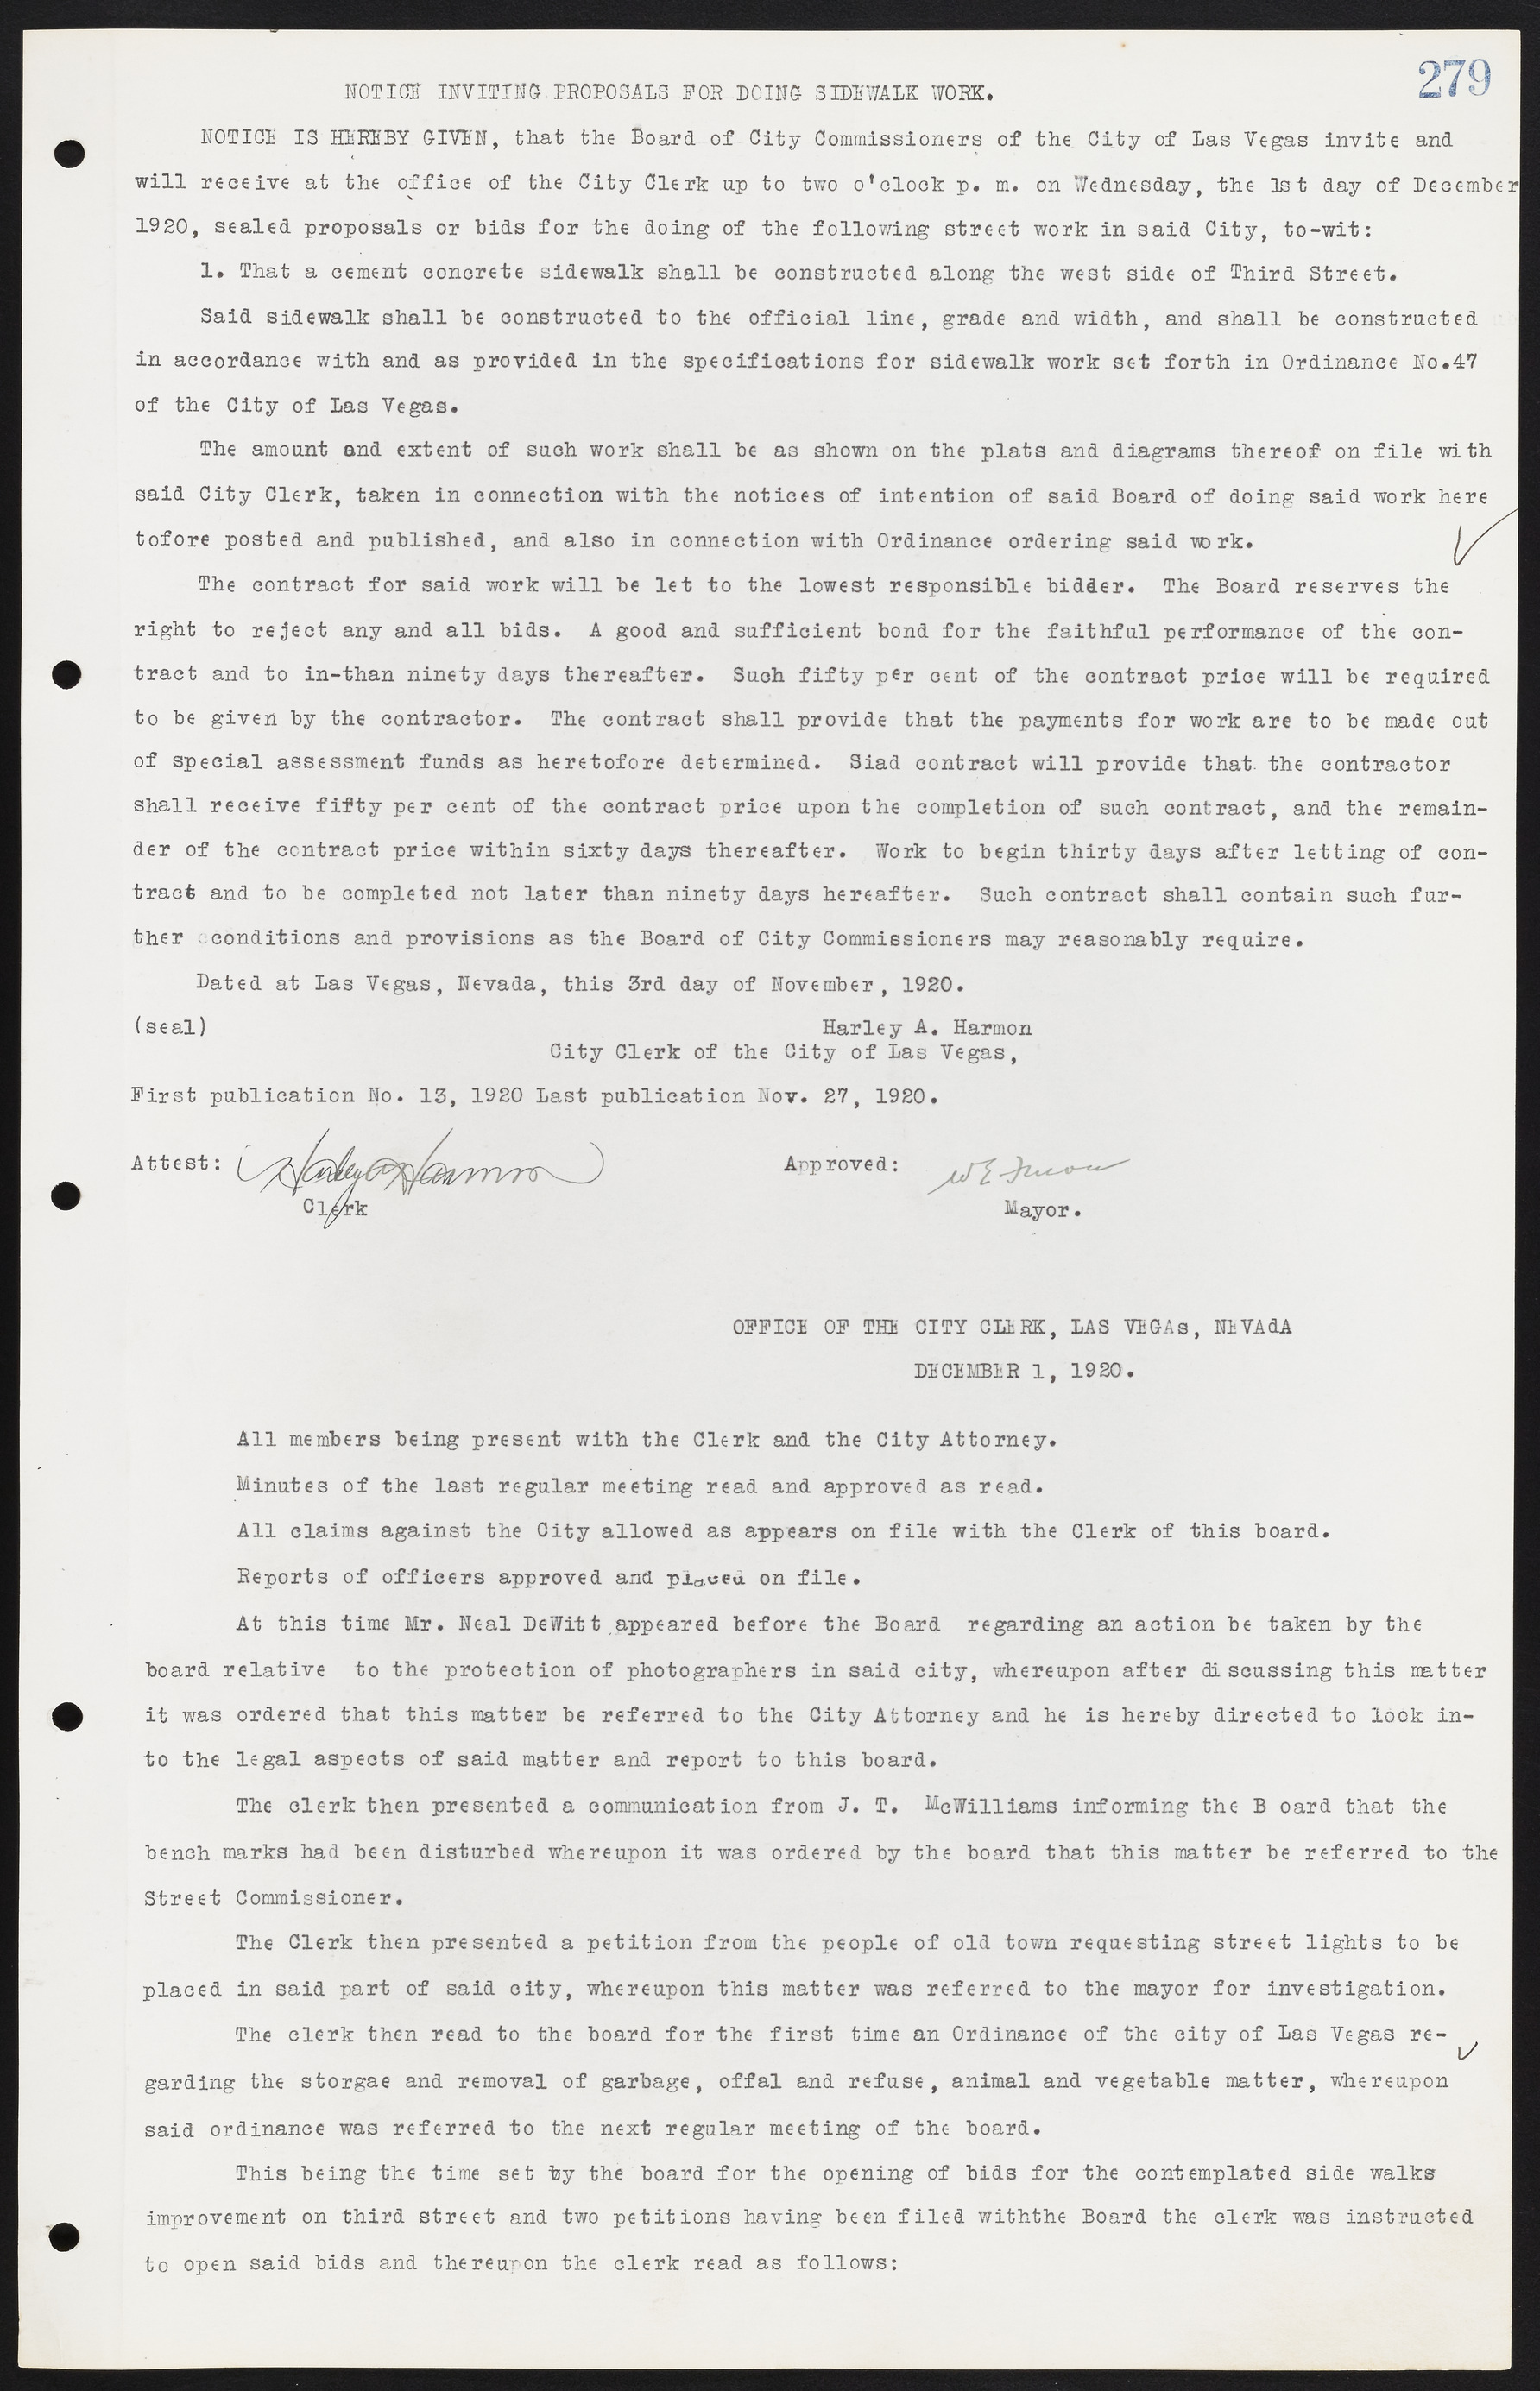 Las Vegas City Commission Minutes, June 22, 1911 to February 7, 1922, lvc000001-295